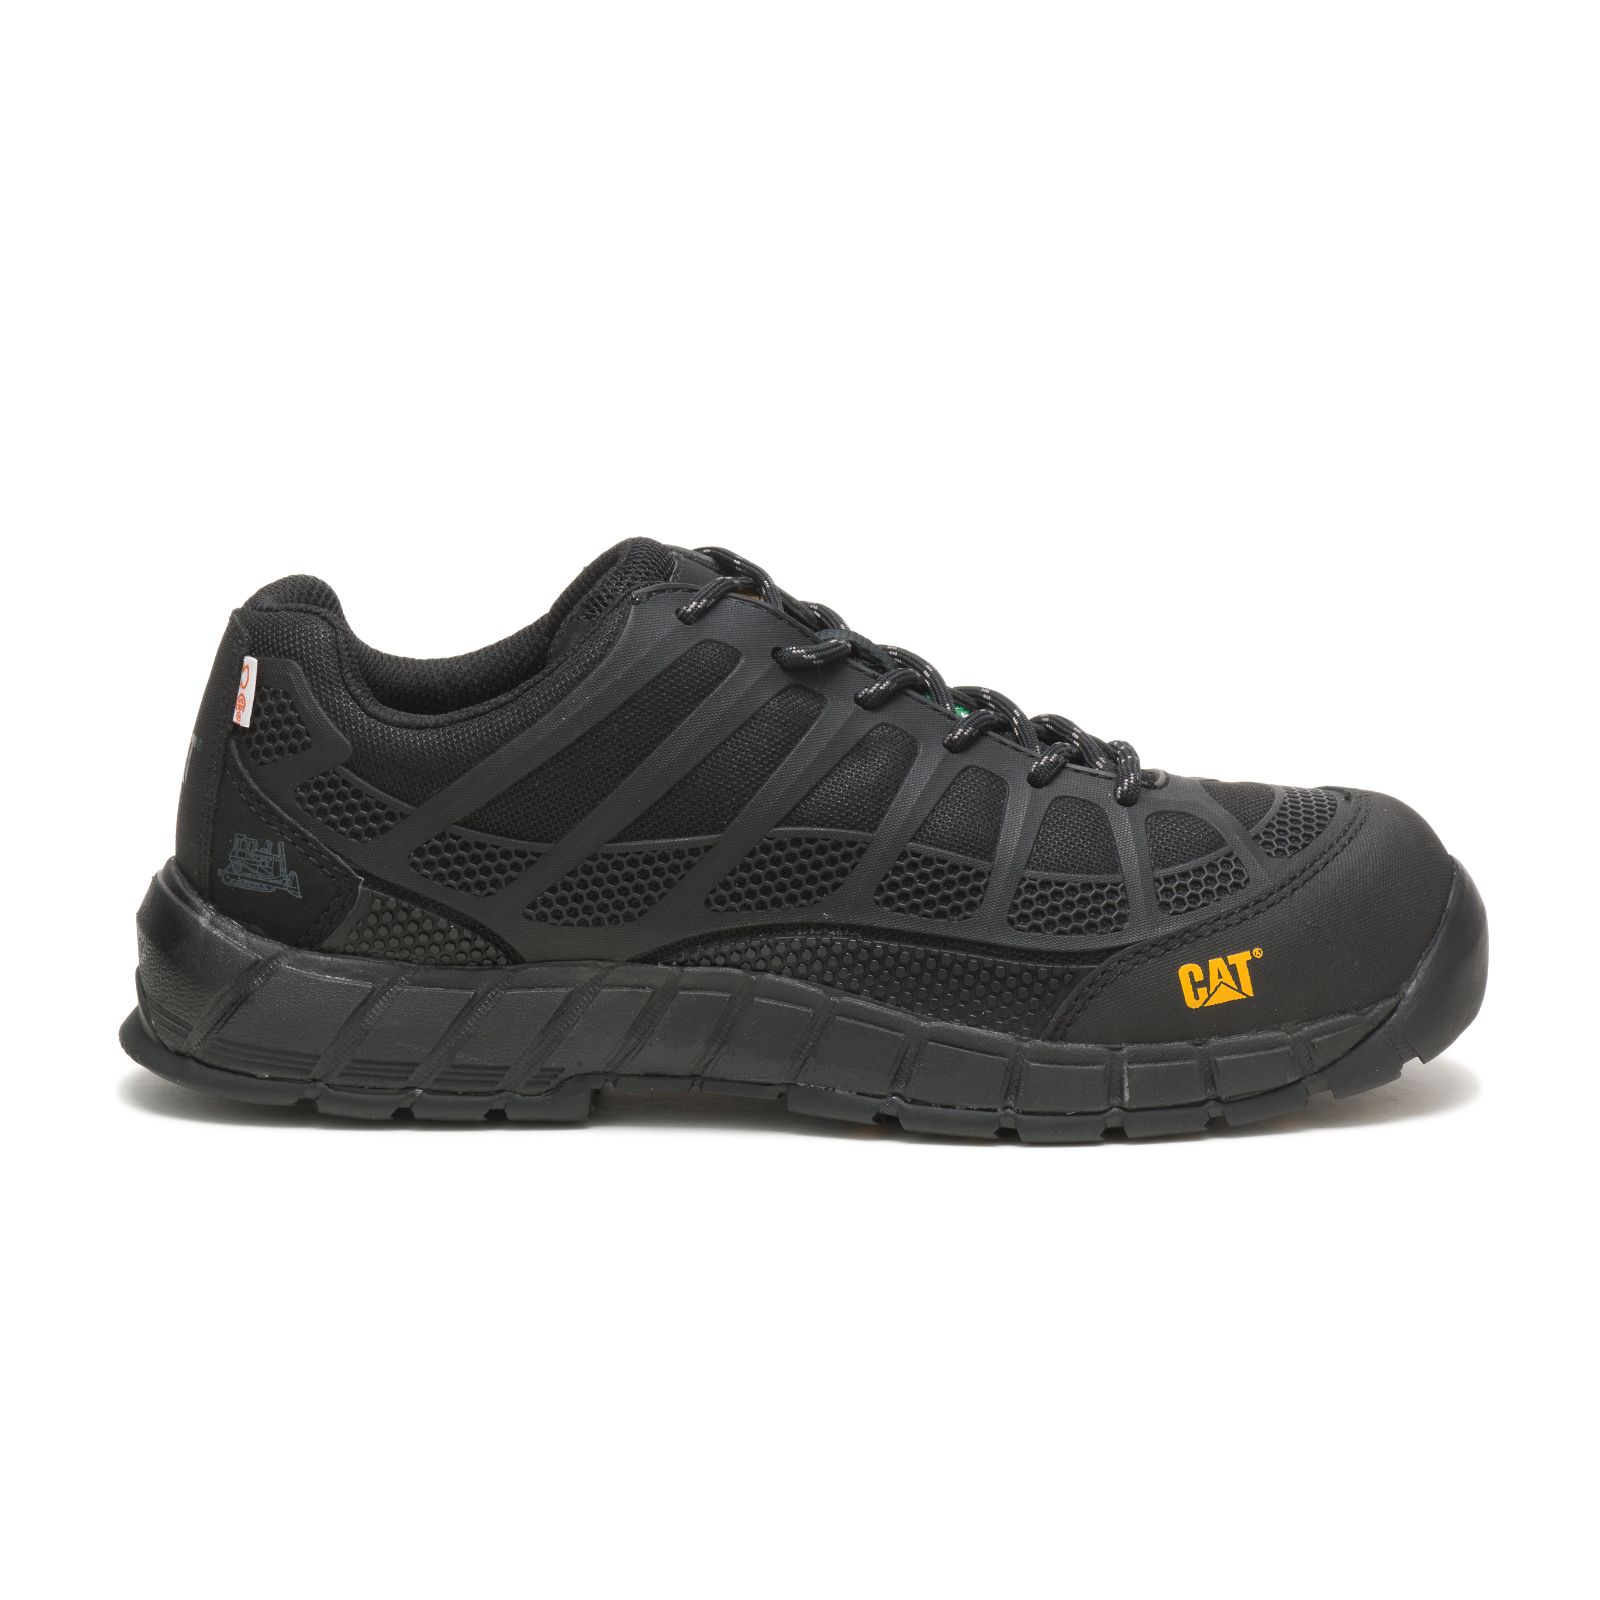 Caterpillar Sneakers UAE - Caterpillar Streamline Csa Shoe (Composite Toe, Non Metallic) Mens - Black IBYKXU241